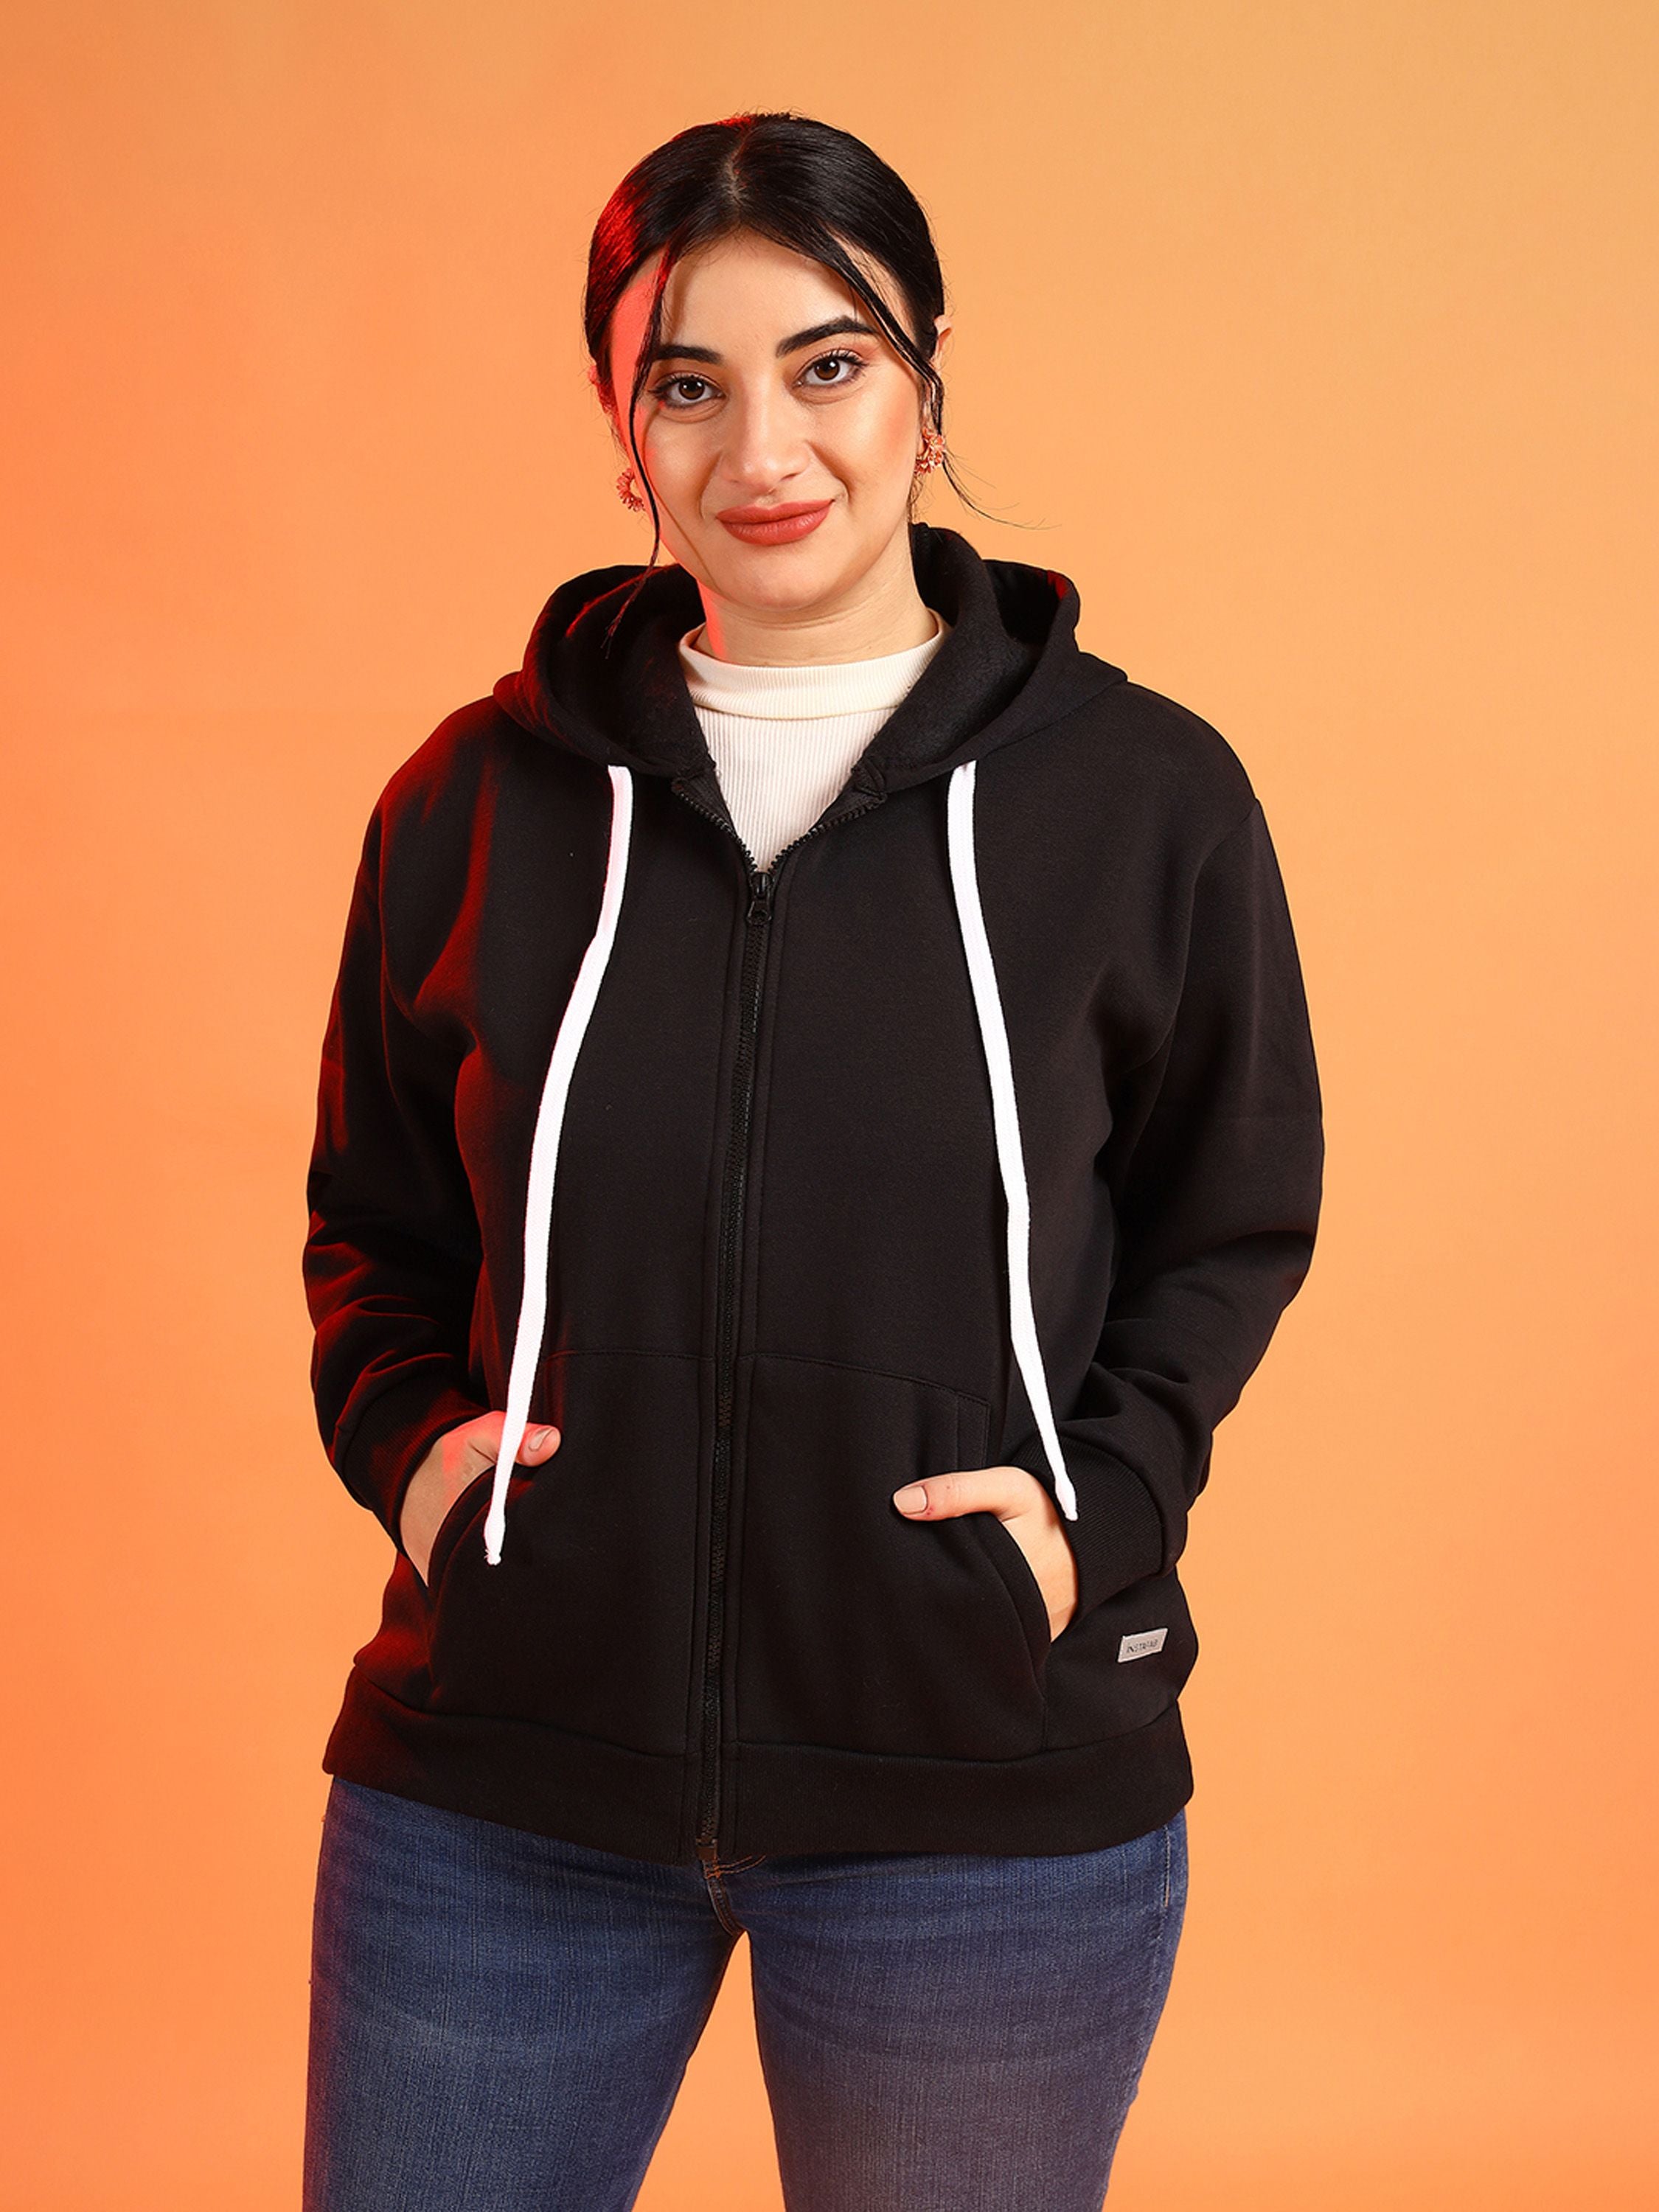 Plus Size Women Solid Stylish Casual Hooded Sweatshirt Black